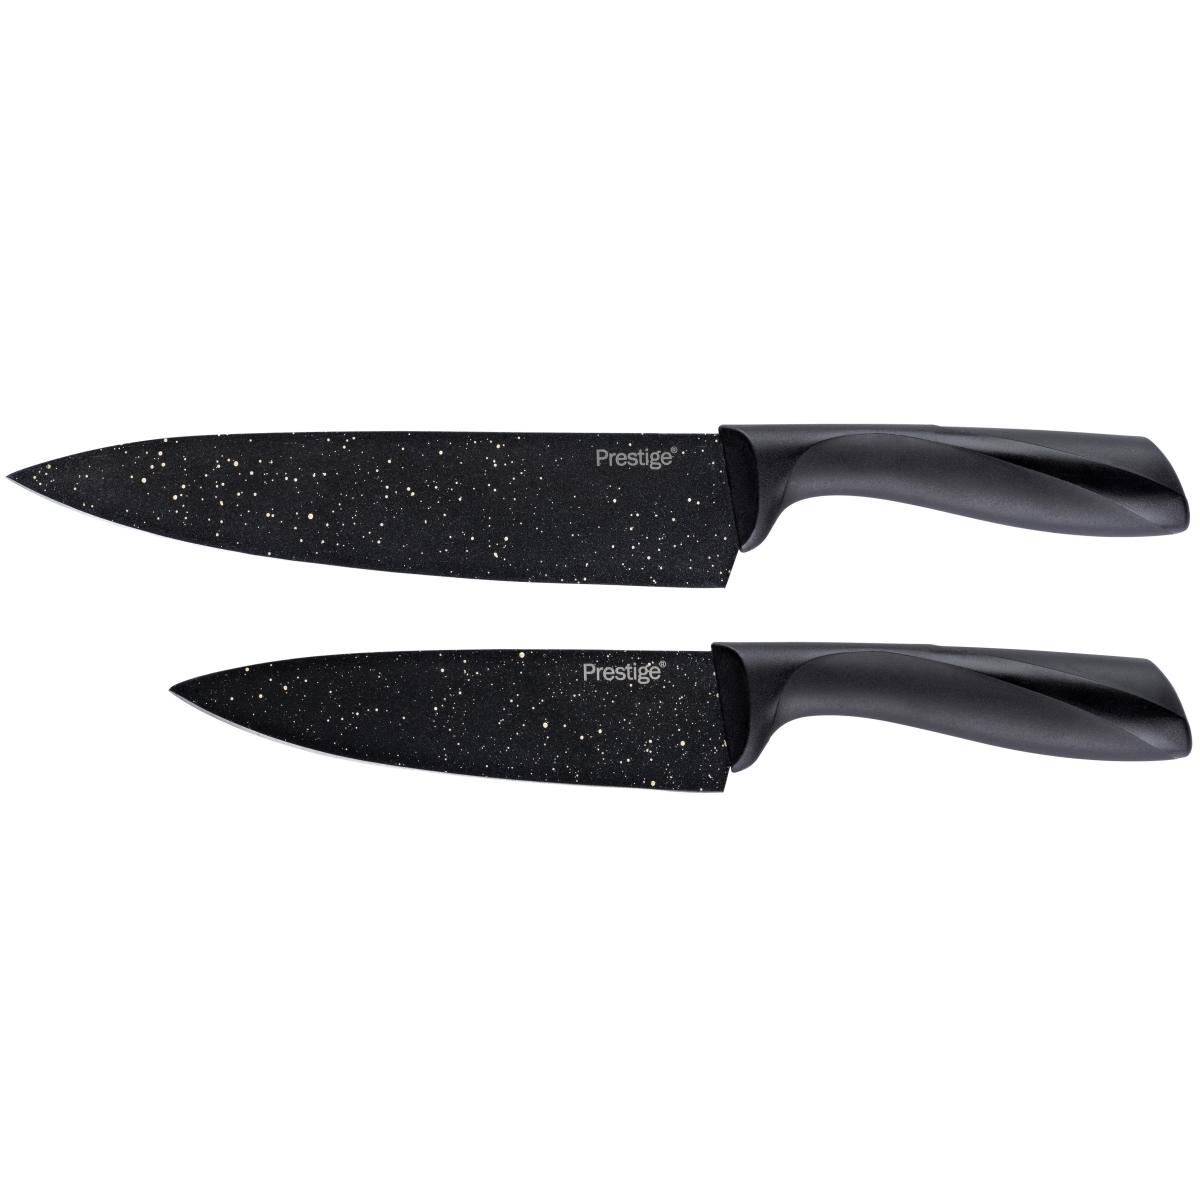 47735 6 In. Stone Quartz Nonstick Knife Set - Black & Gold Speckle, 2 Piece